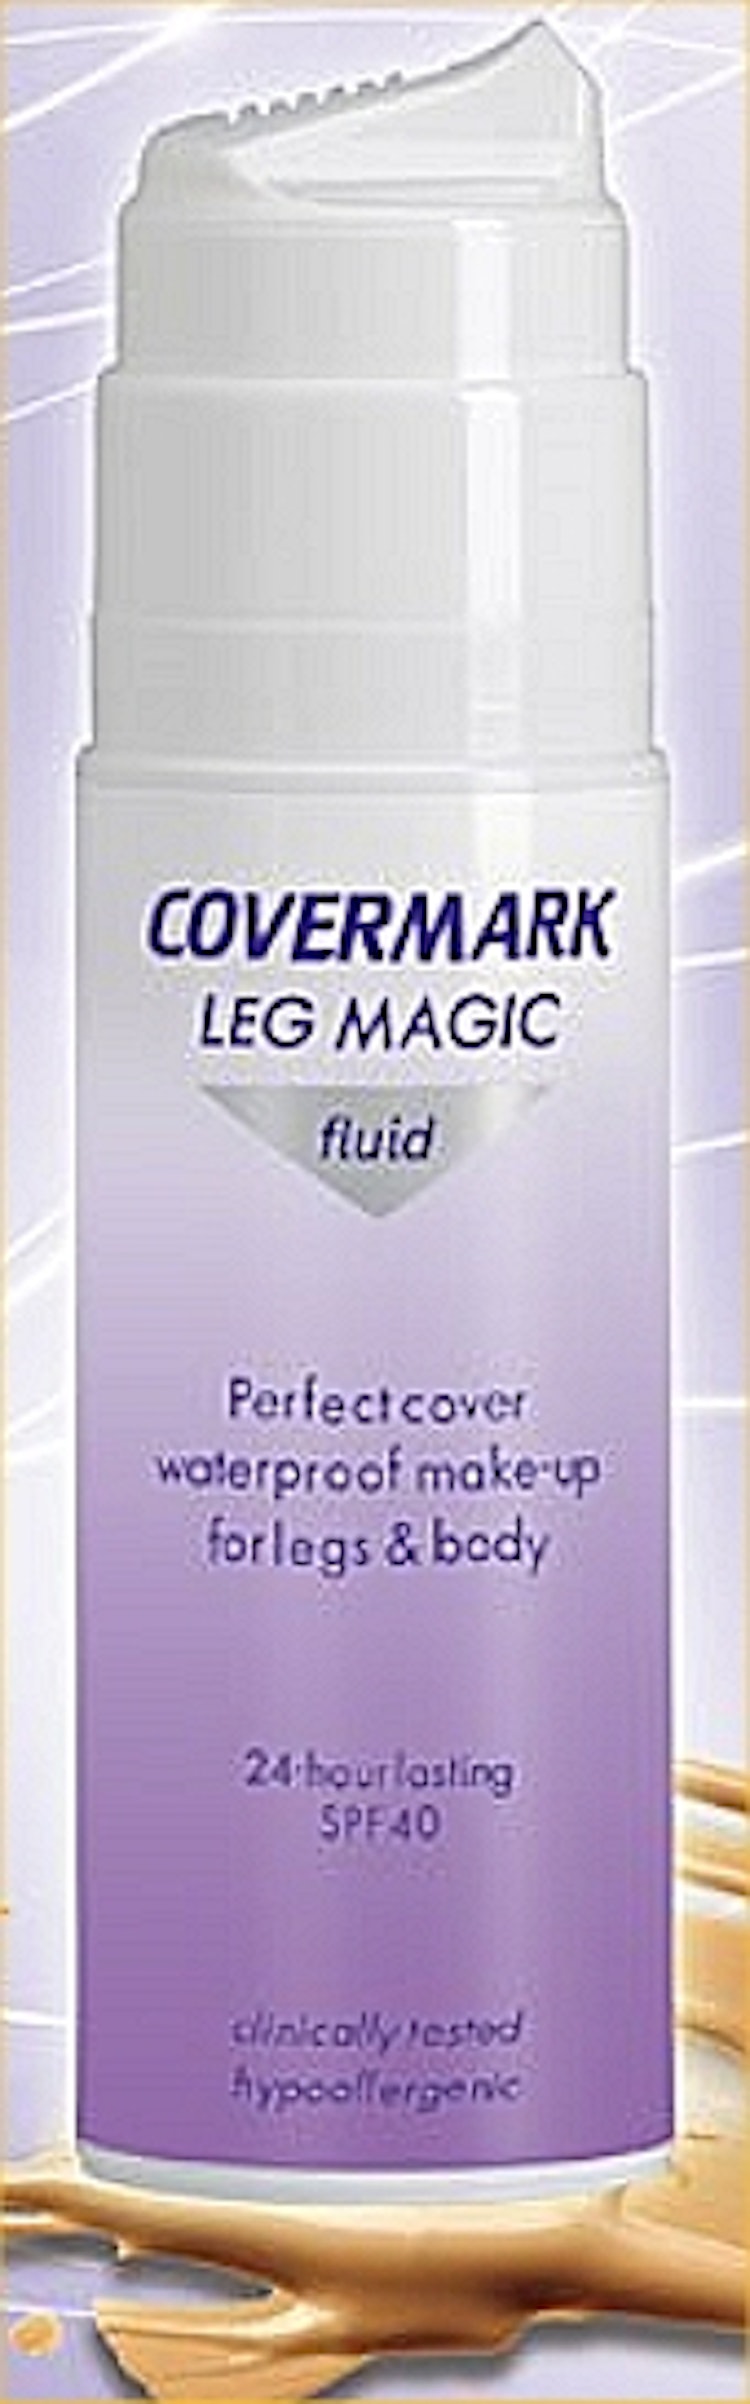 Leg Magic Fluid